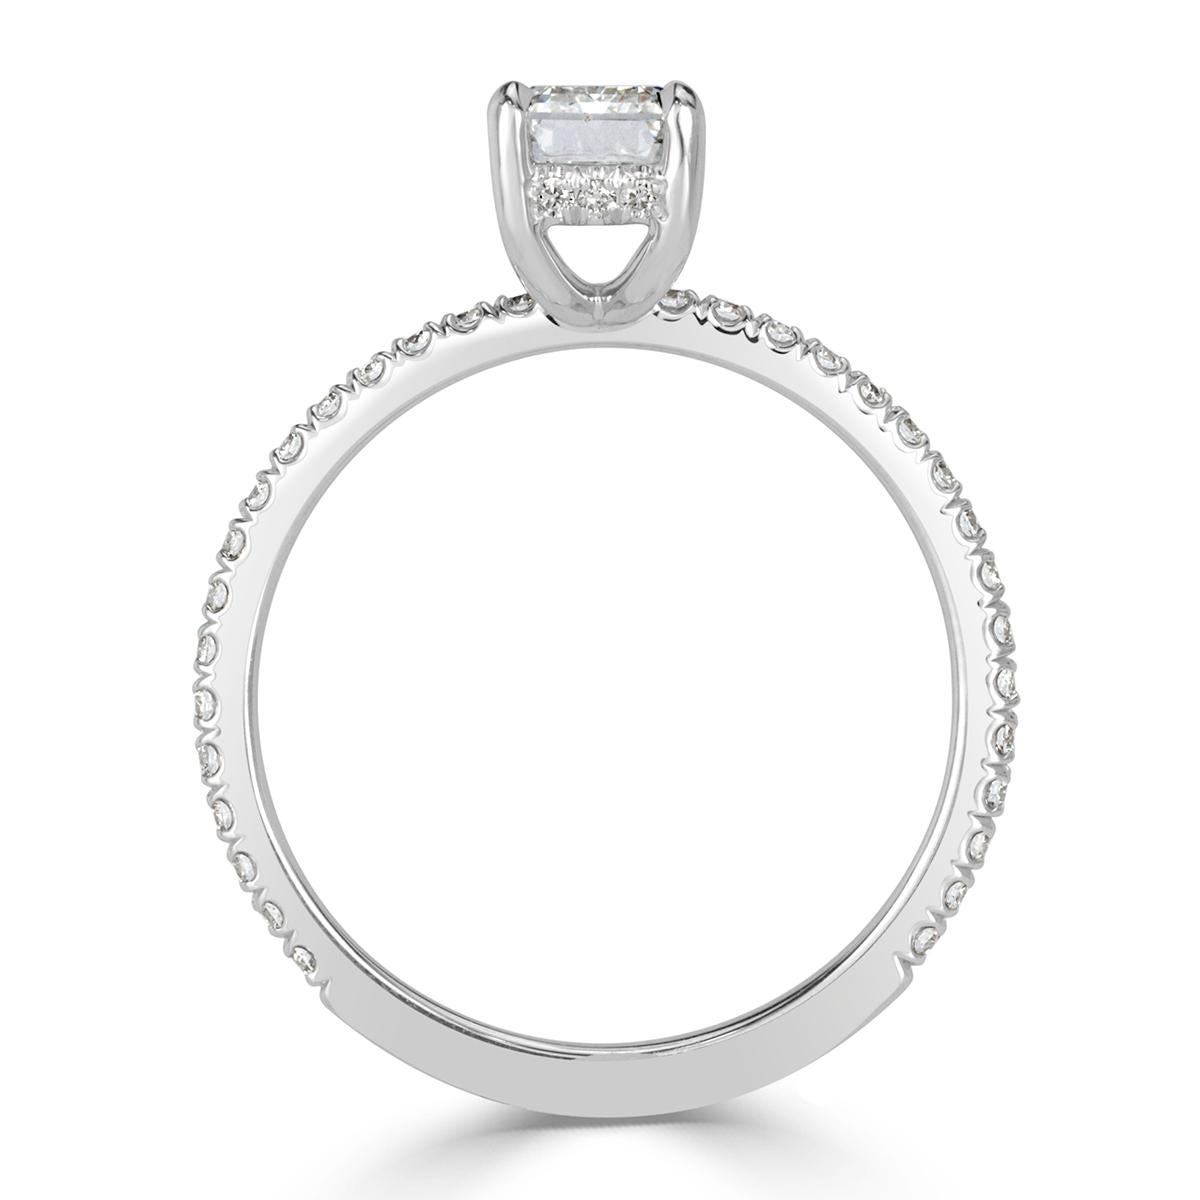 Women's or Men's Mark Broumand 1.37 Carat Emerald Cut Diamond Engagement Ring